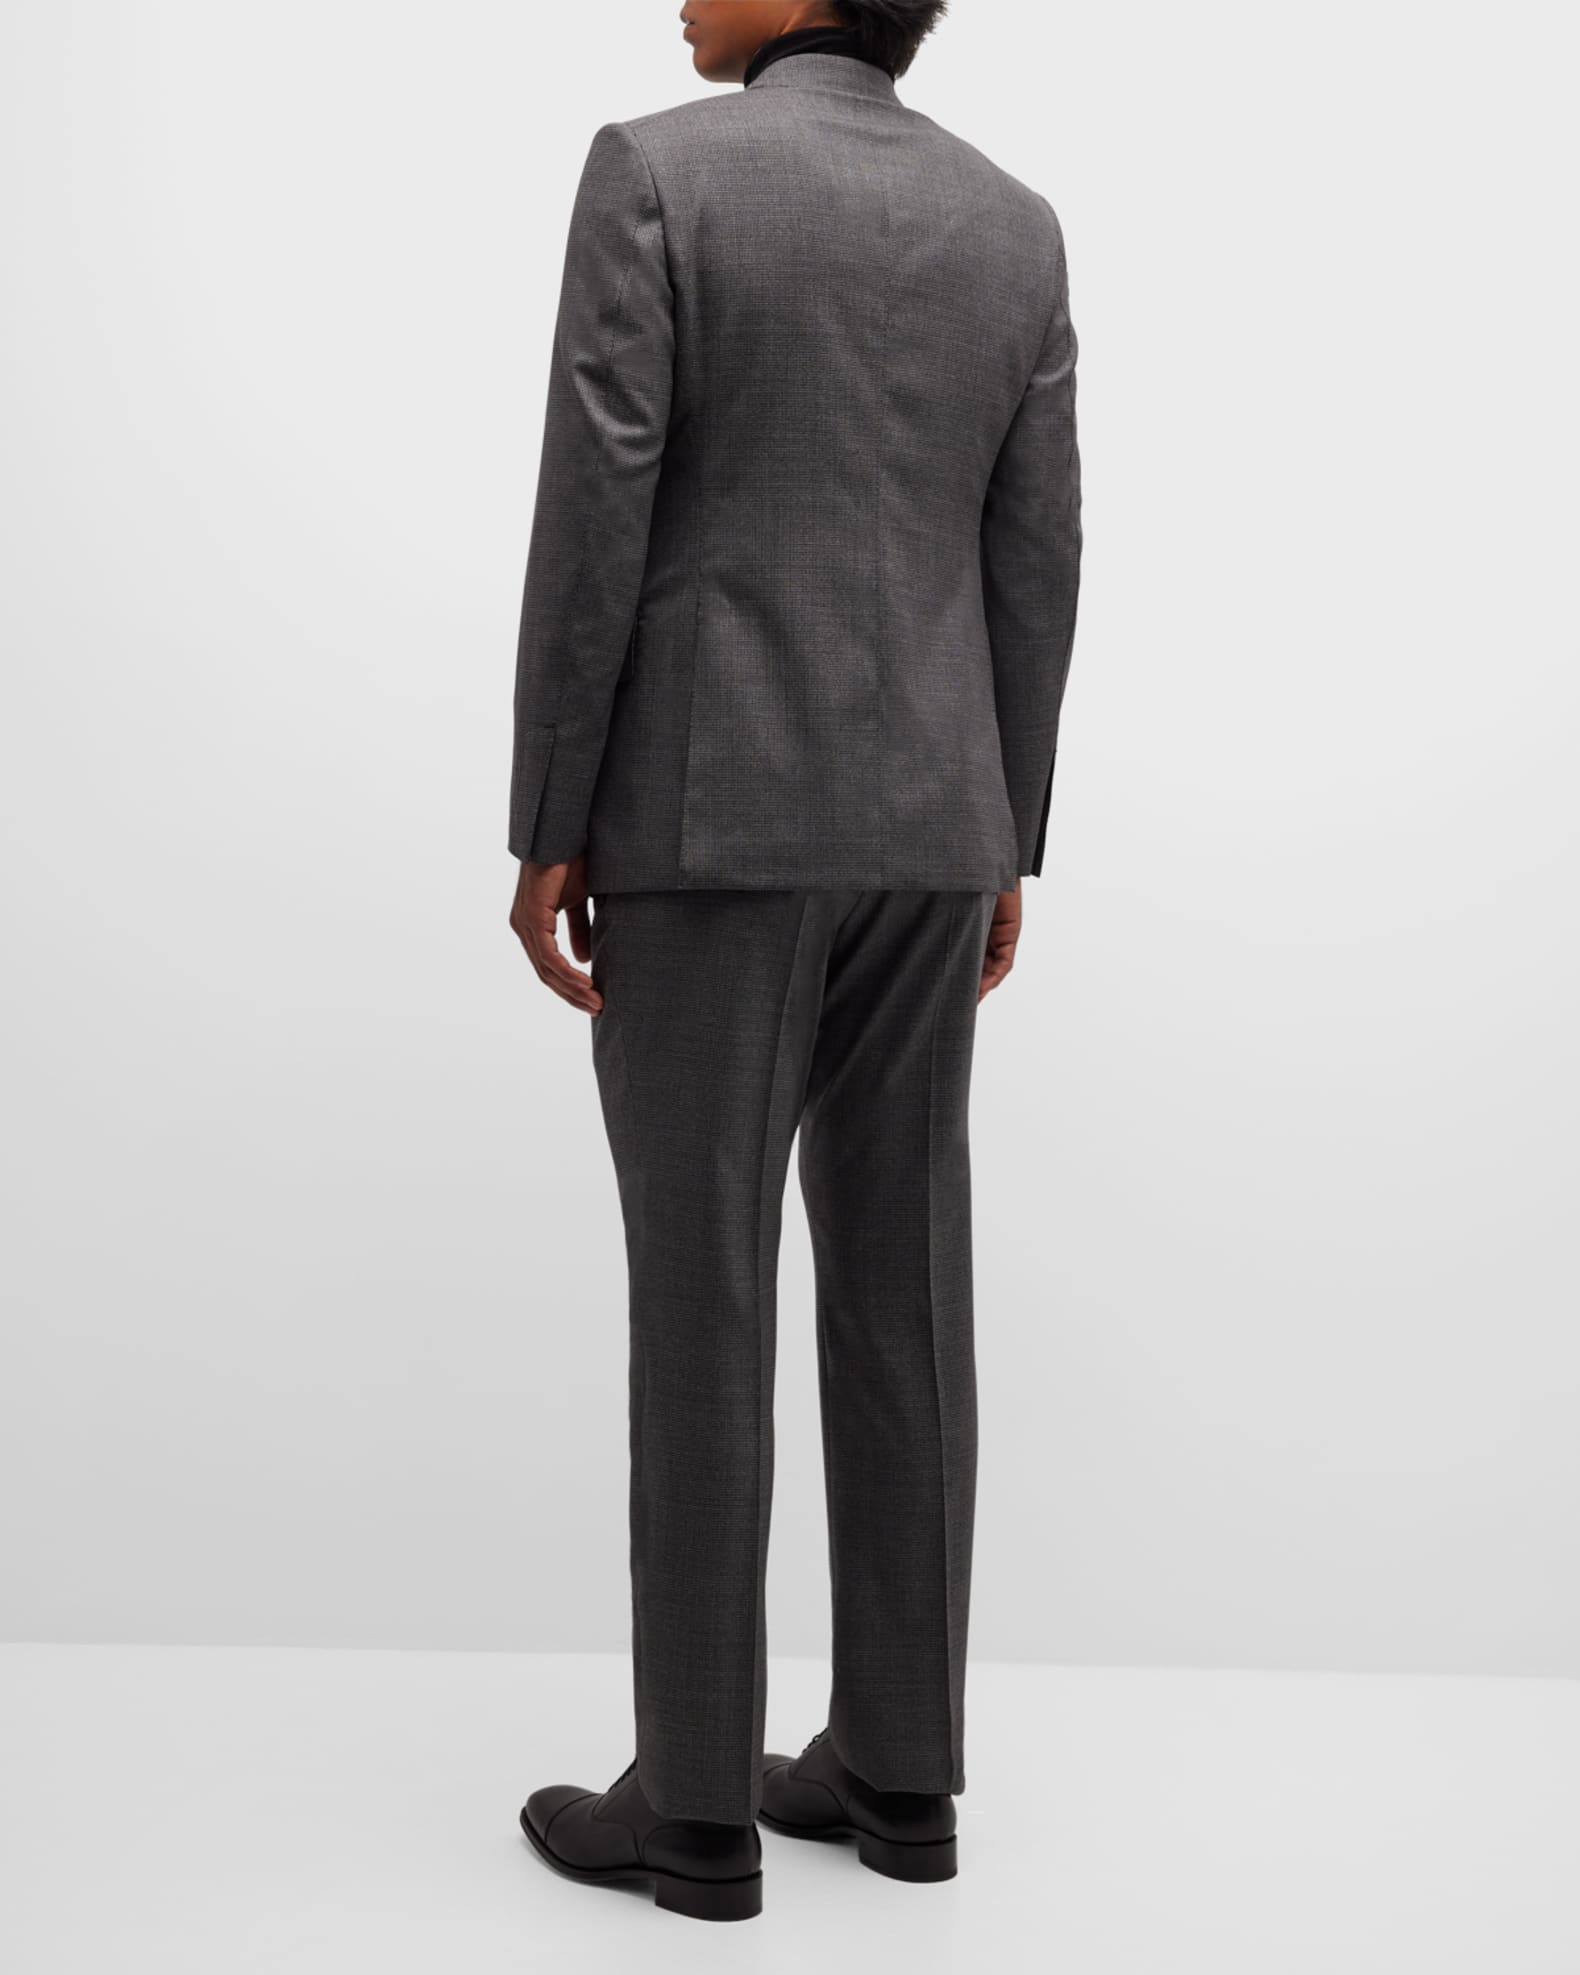 TOM FORD Men's Shelton Micro Basketweave Suit | Neiman Marcus